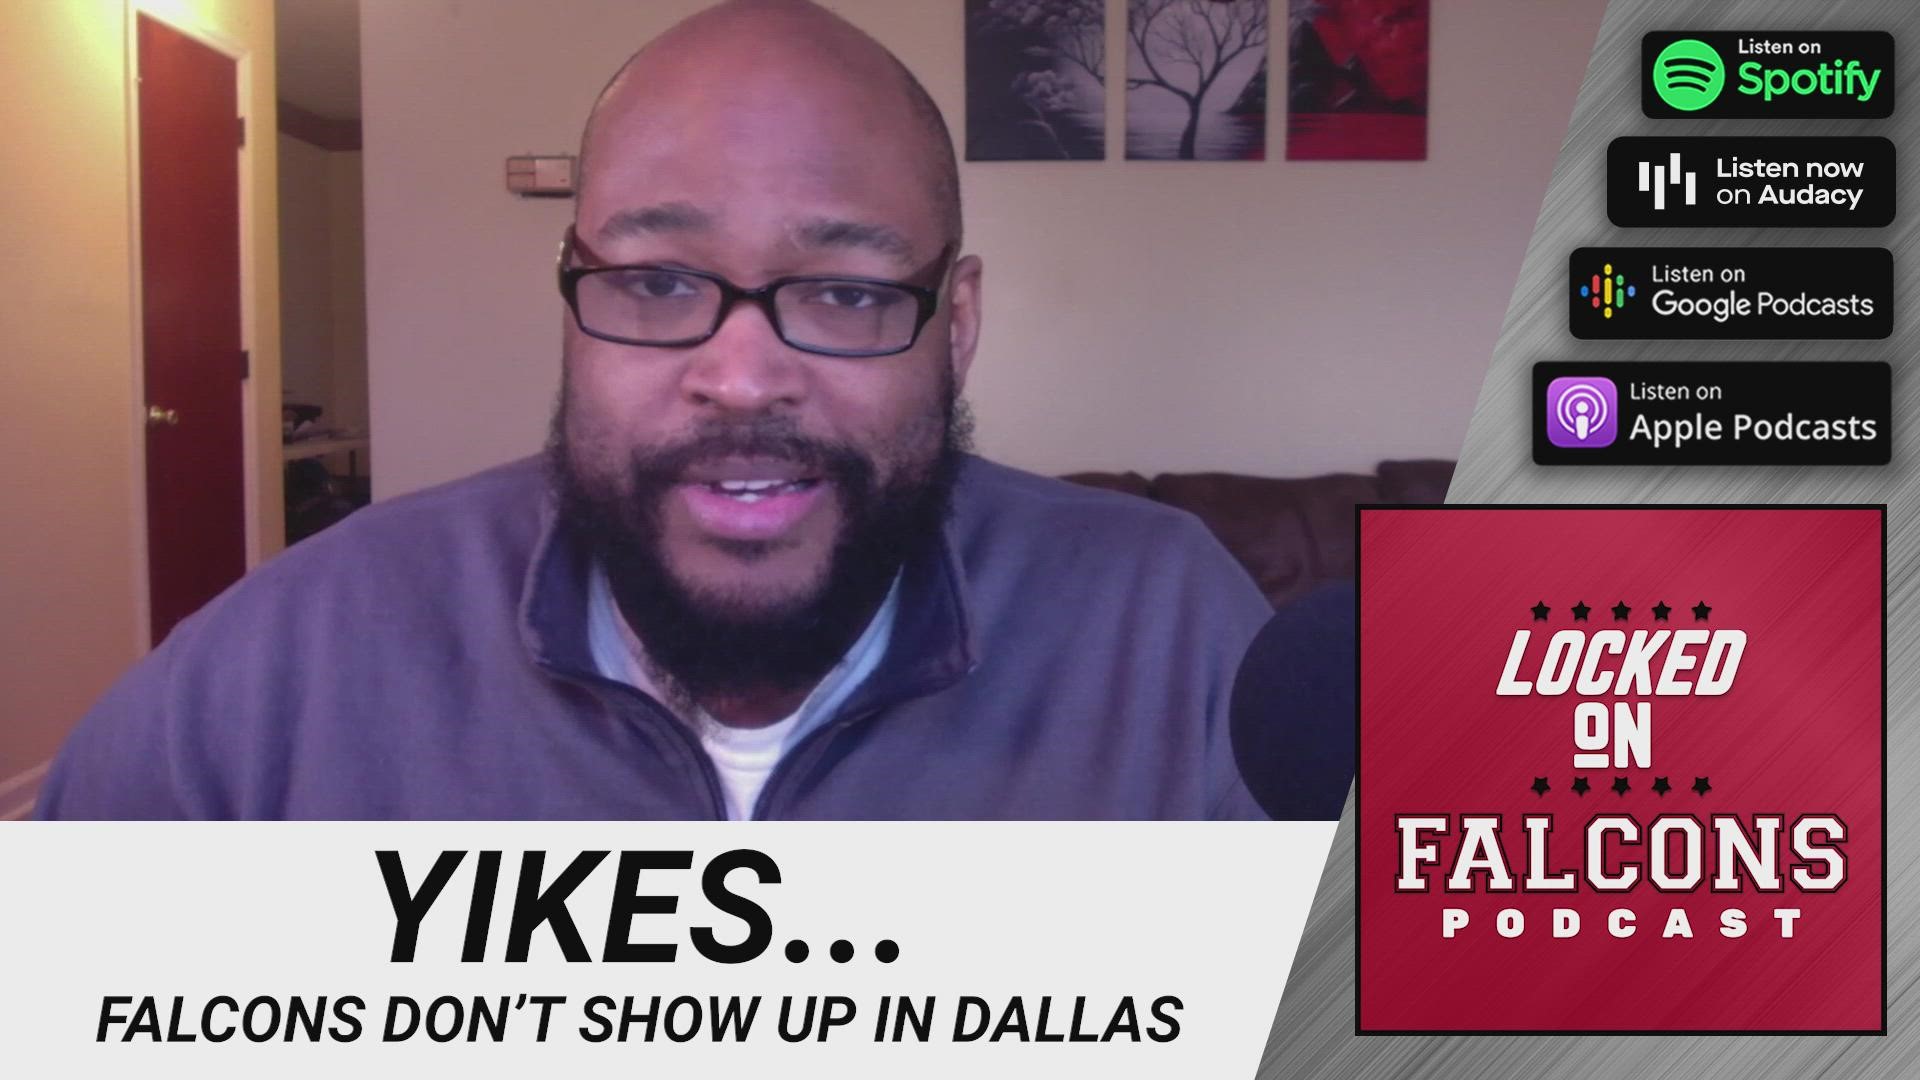 The Atlanta Falcons lost 43-3 to the Dallas Cowboys on Sunday.